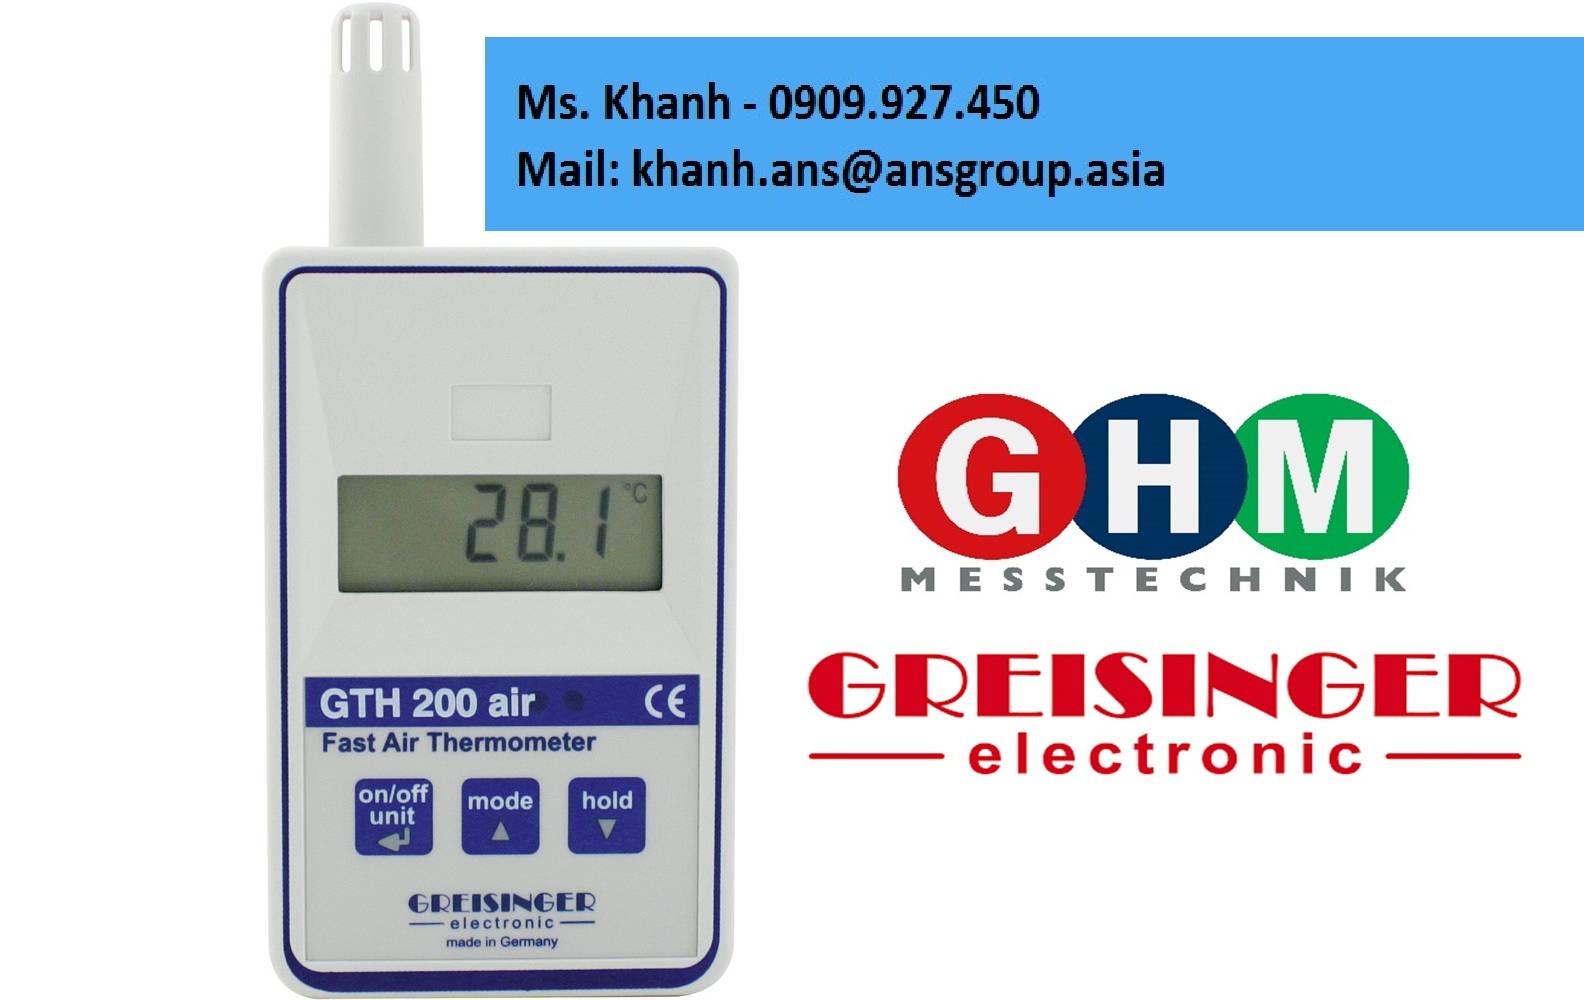 gftb-200-greisinger-climate-measuring-device-–-precision-hygro-thermo-barometer.png